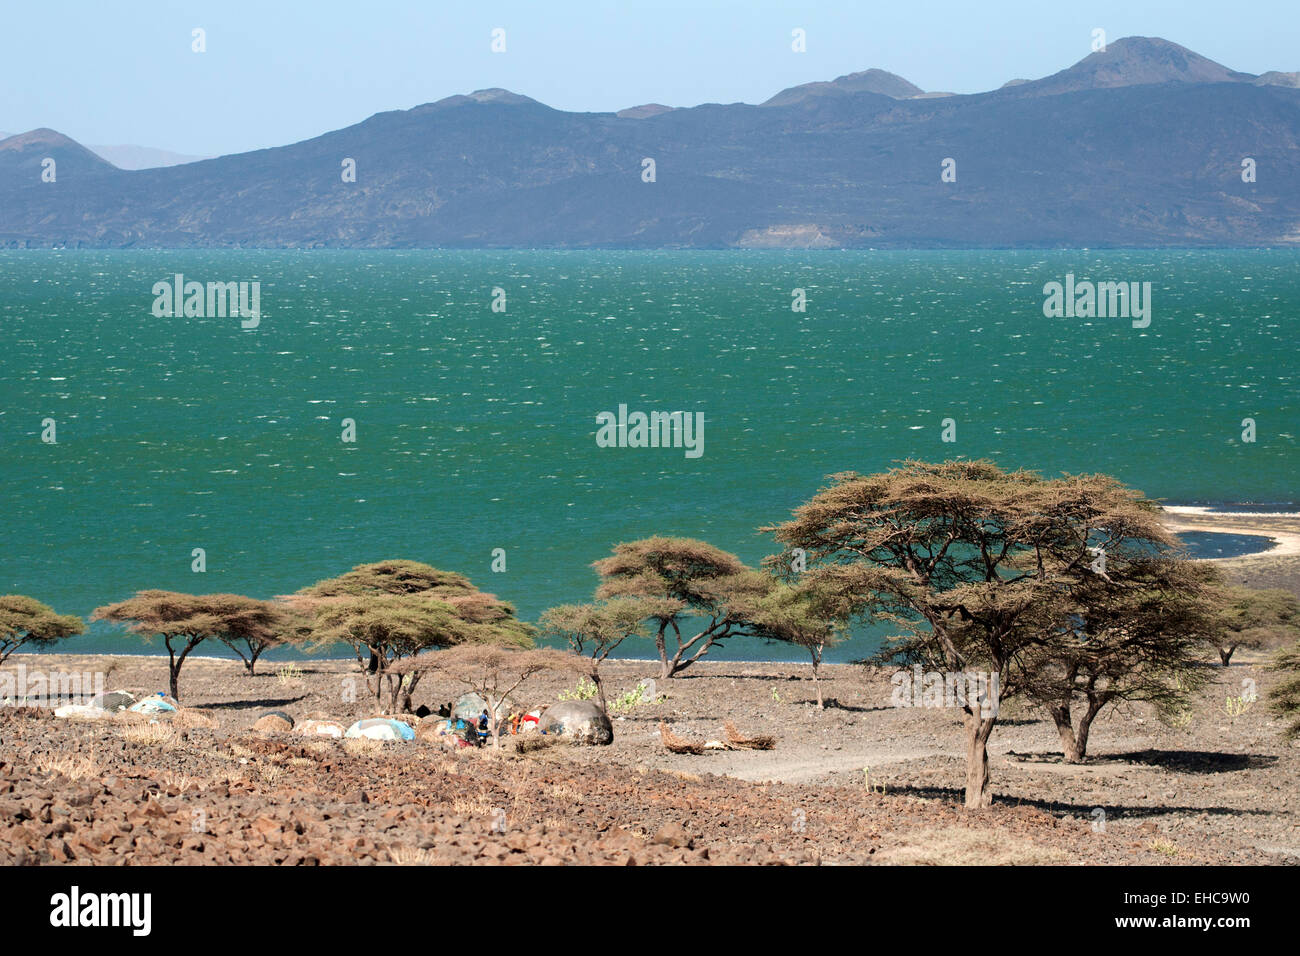 A Turkana village close to Lake Turkana green waters, Loiyangalani area, Kenya Stock Photo